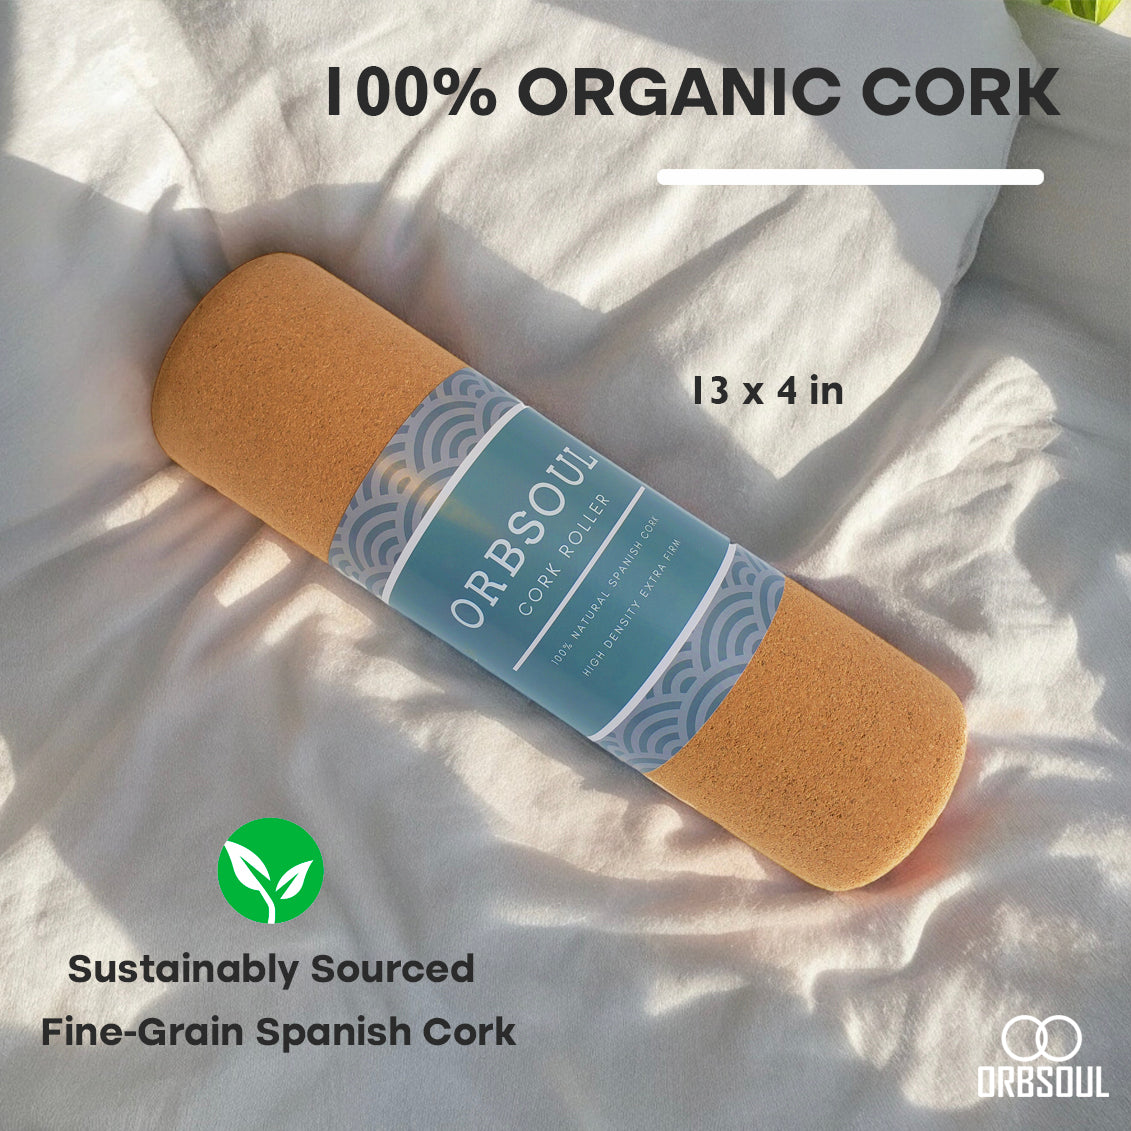 Serenity cork massage roller. 100% Organic cork. sustainably sourced. Fine Grain Spanish cork